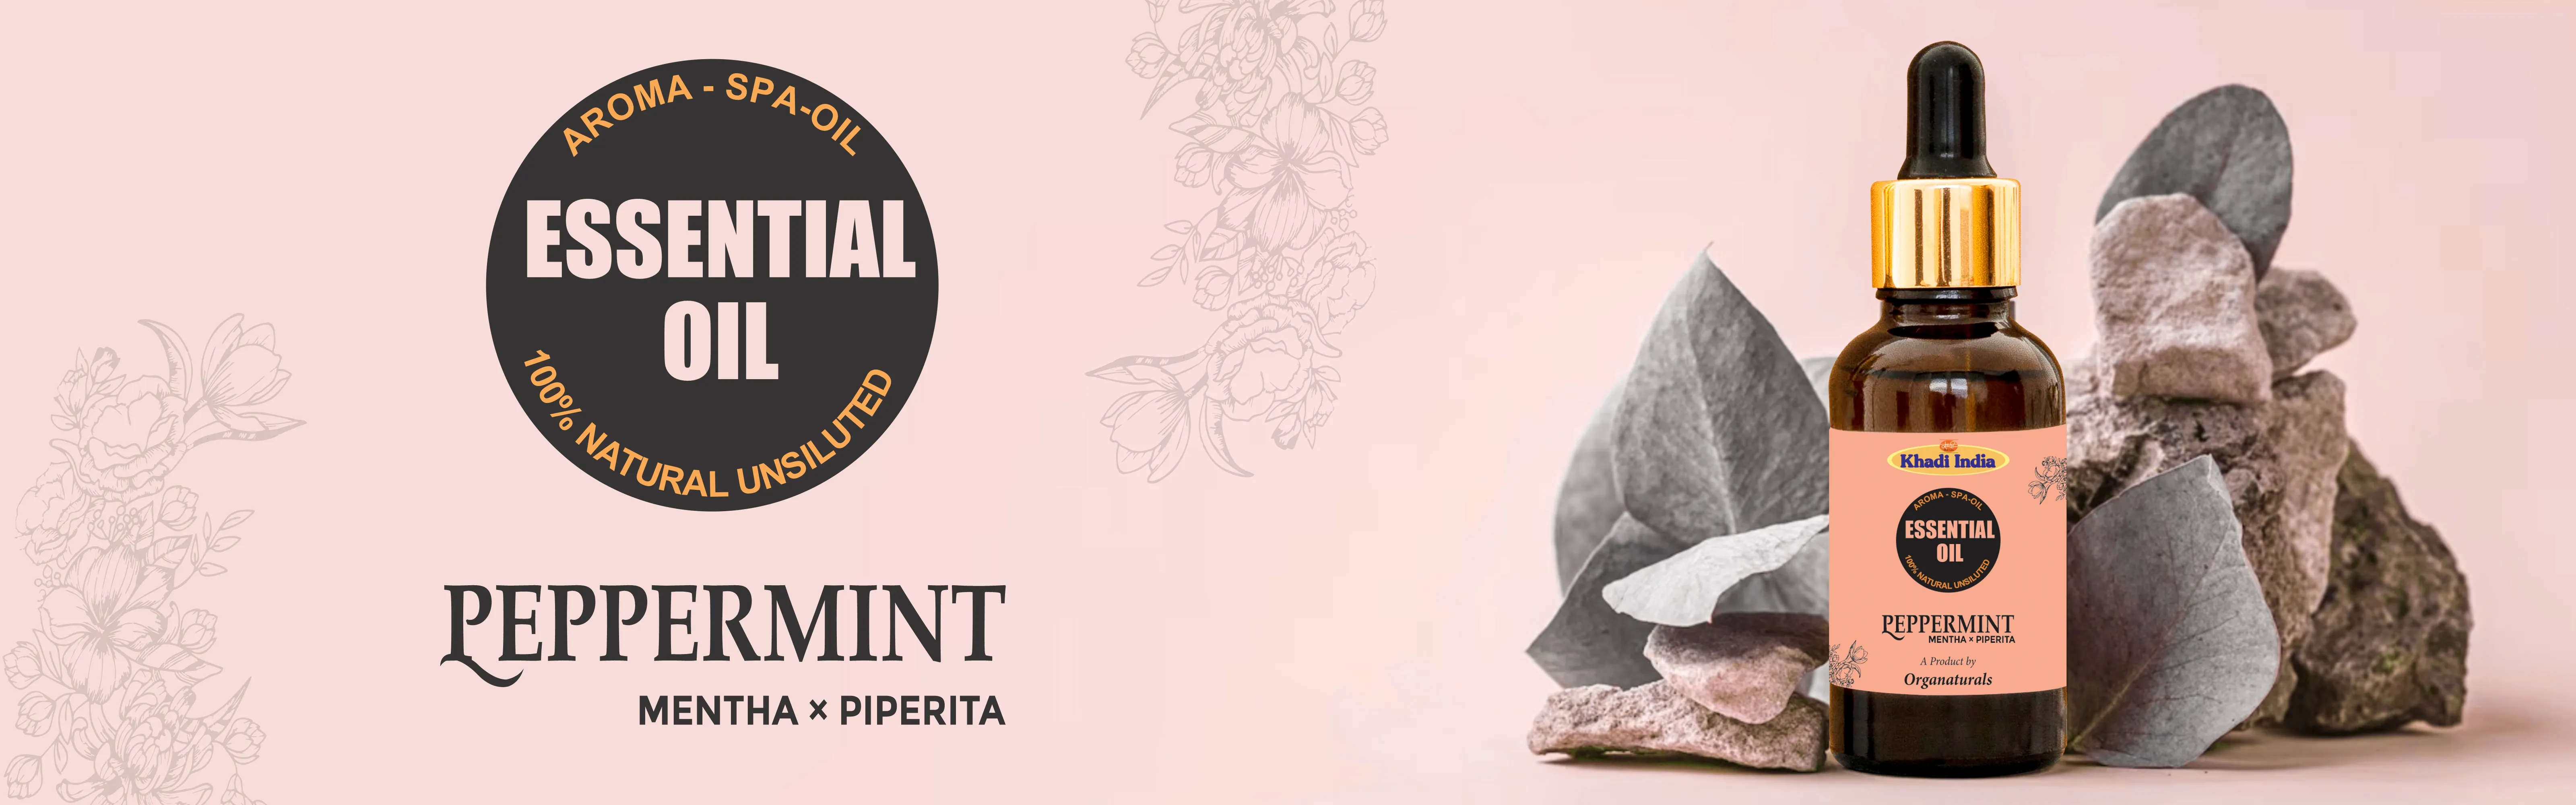 Peppermint Essential Oil - www.dkihenna.com